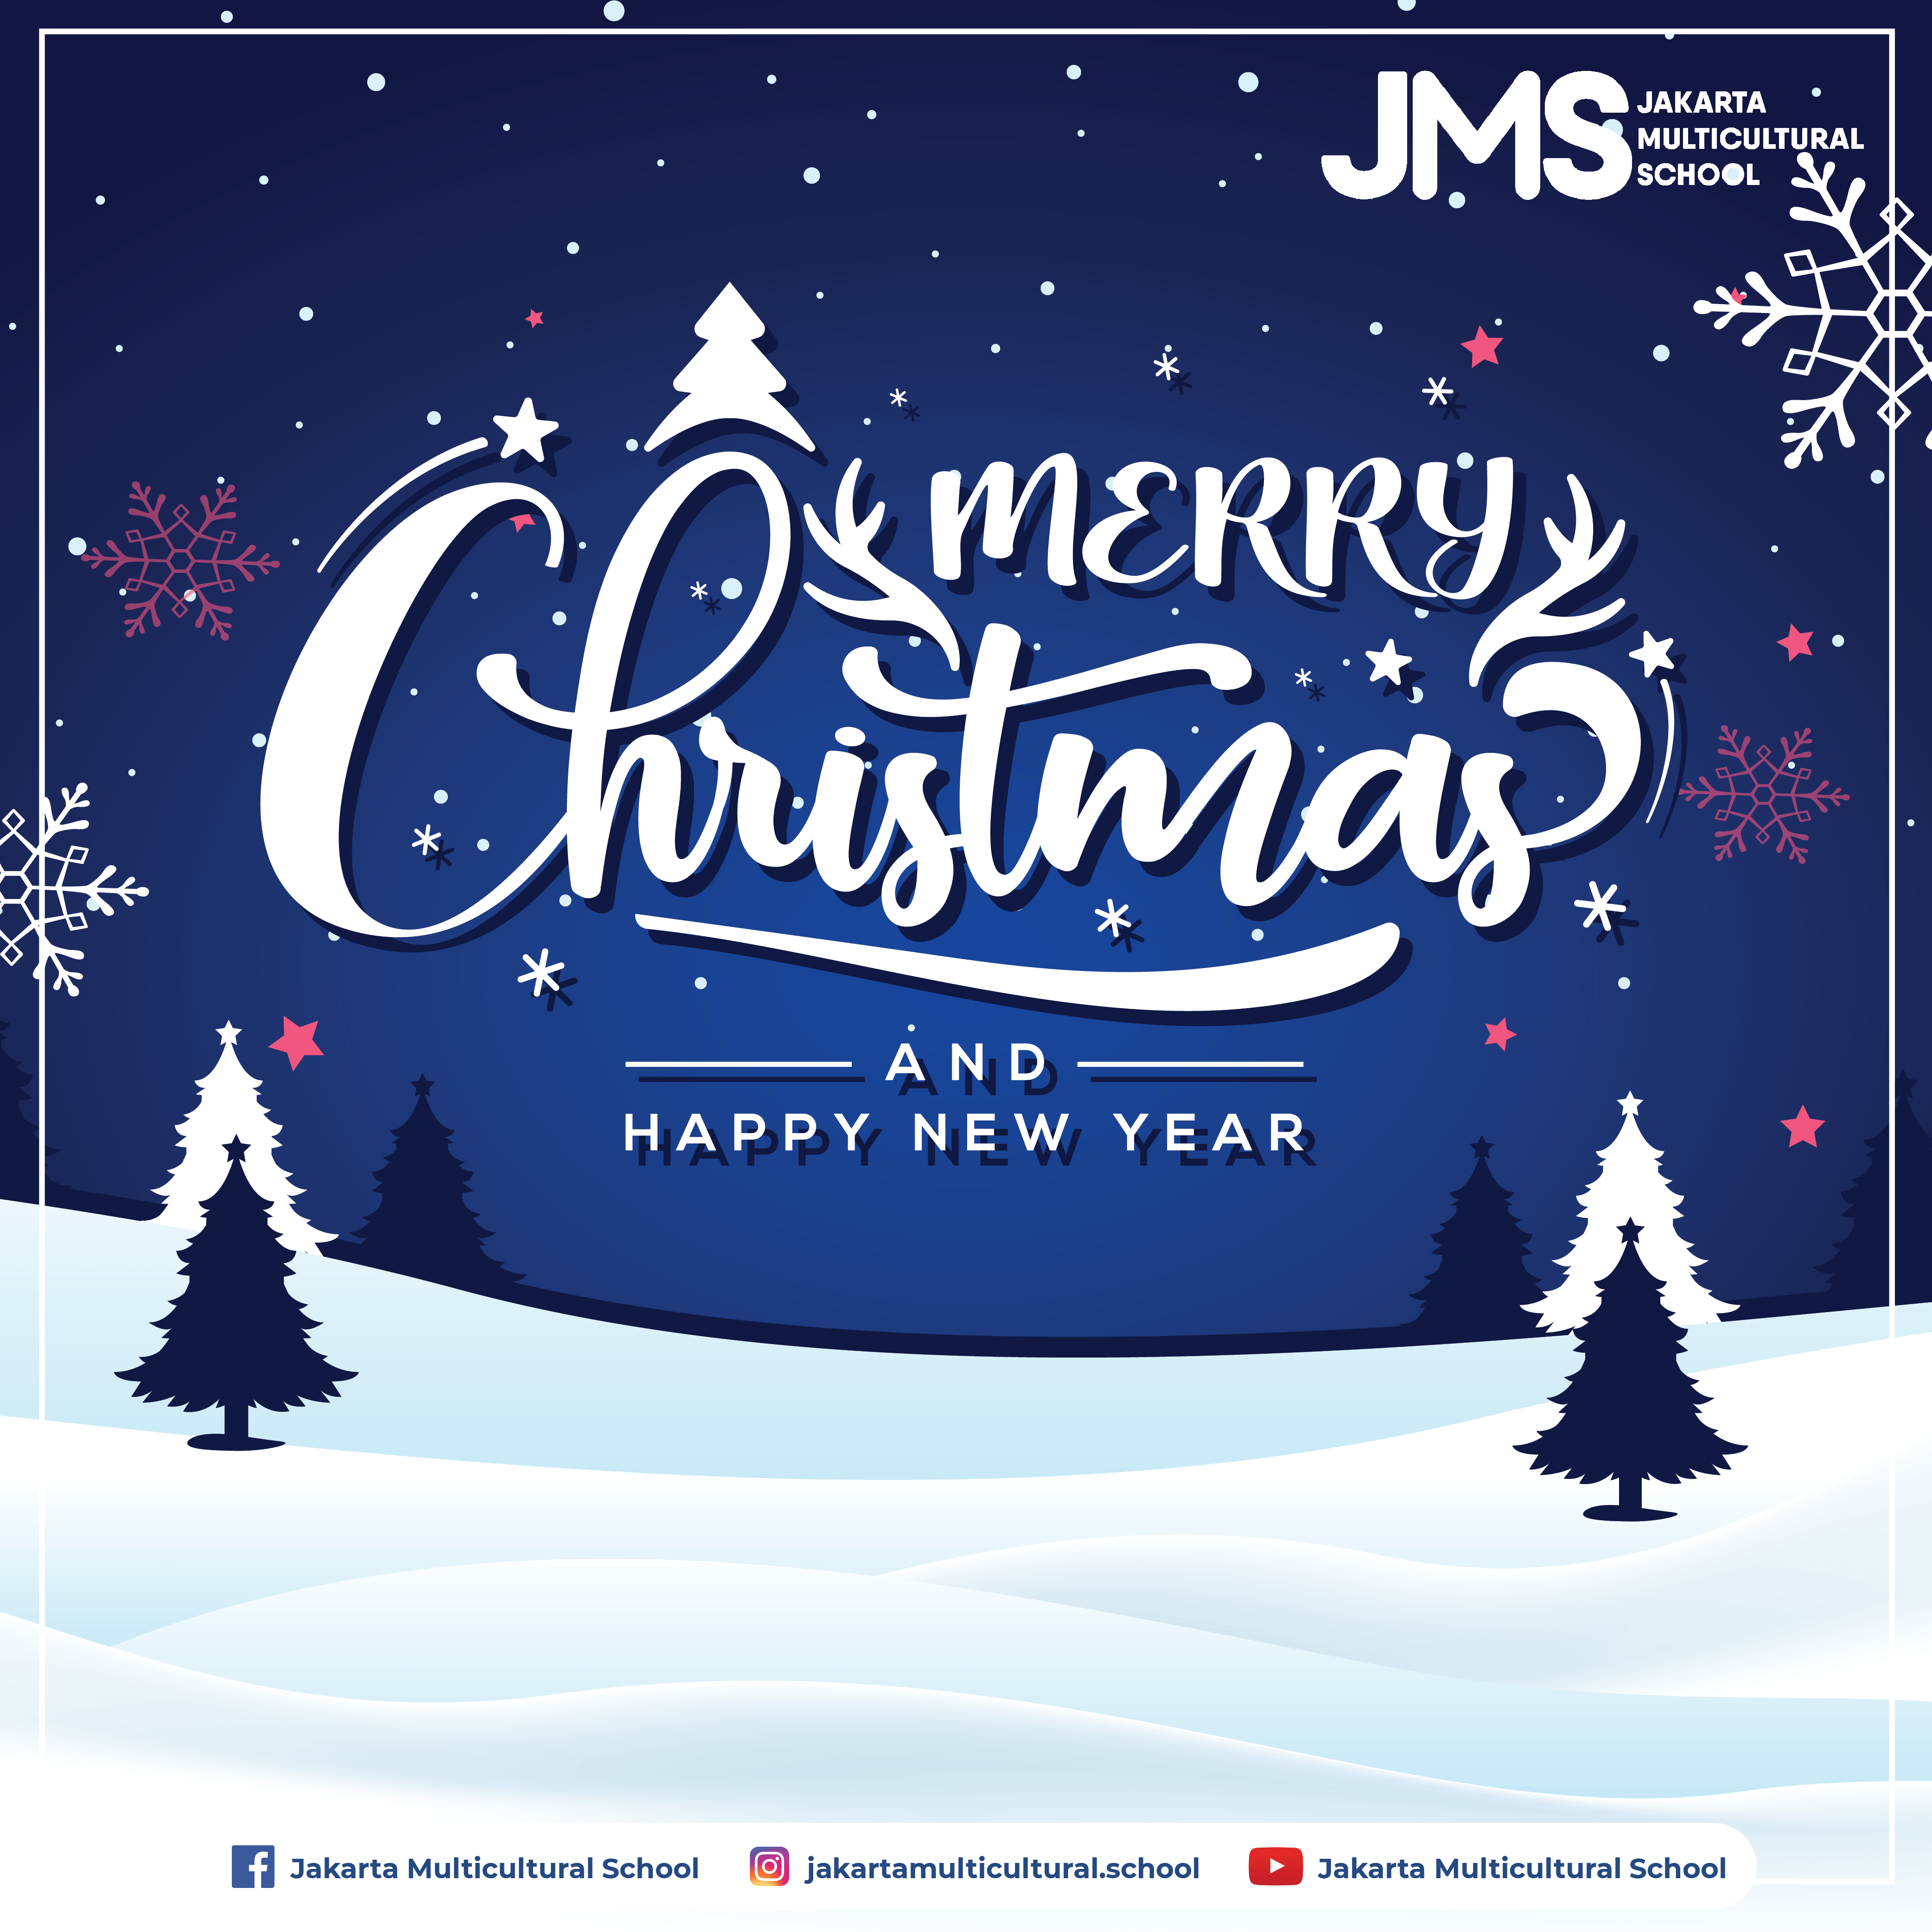 JMS Celebrates Christmas